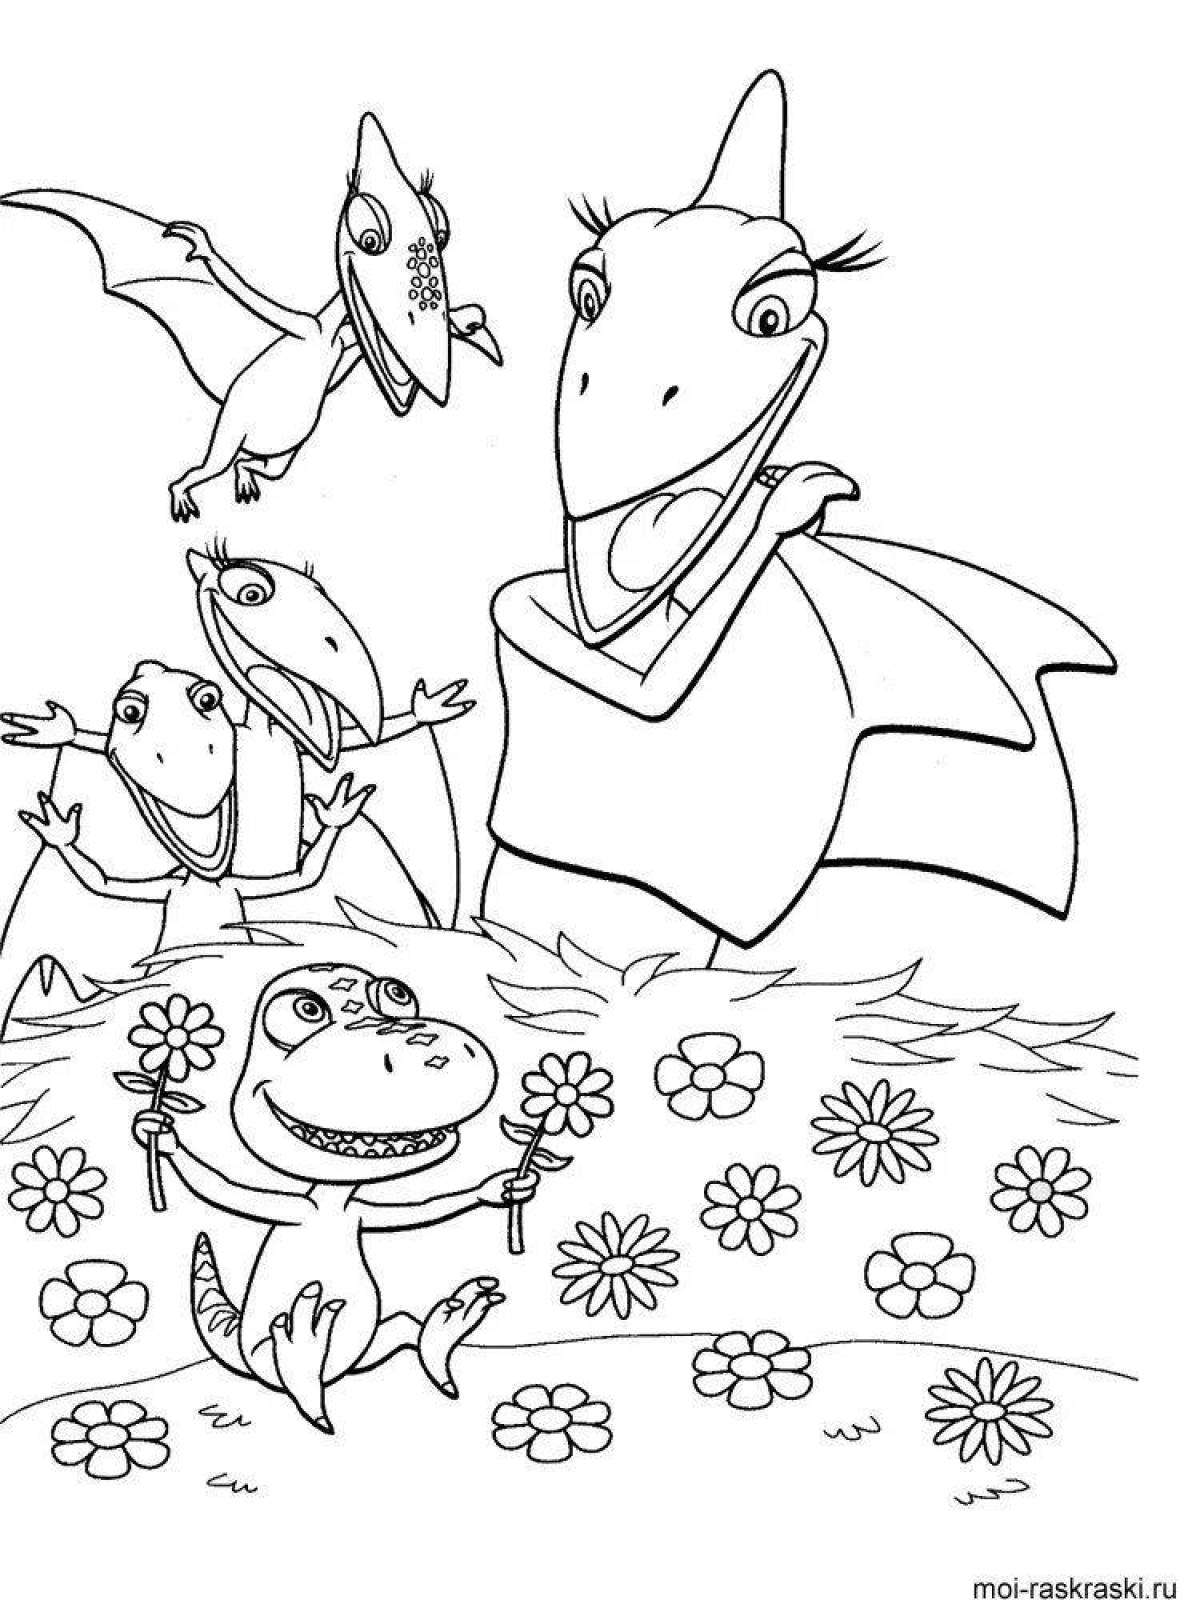 Grand Turbosaurus coloring page